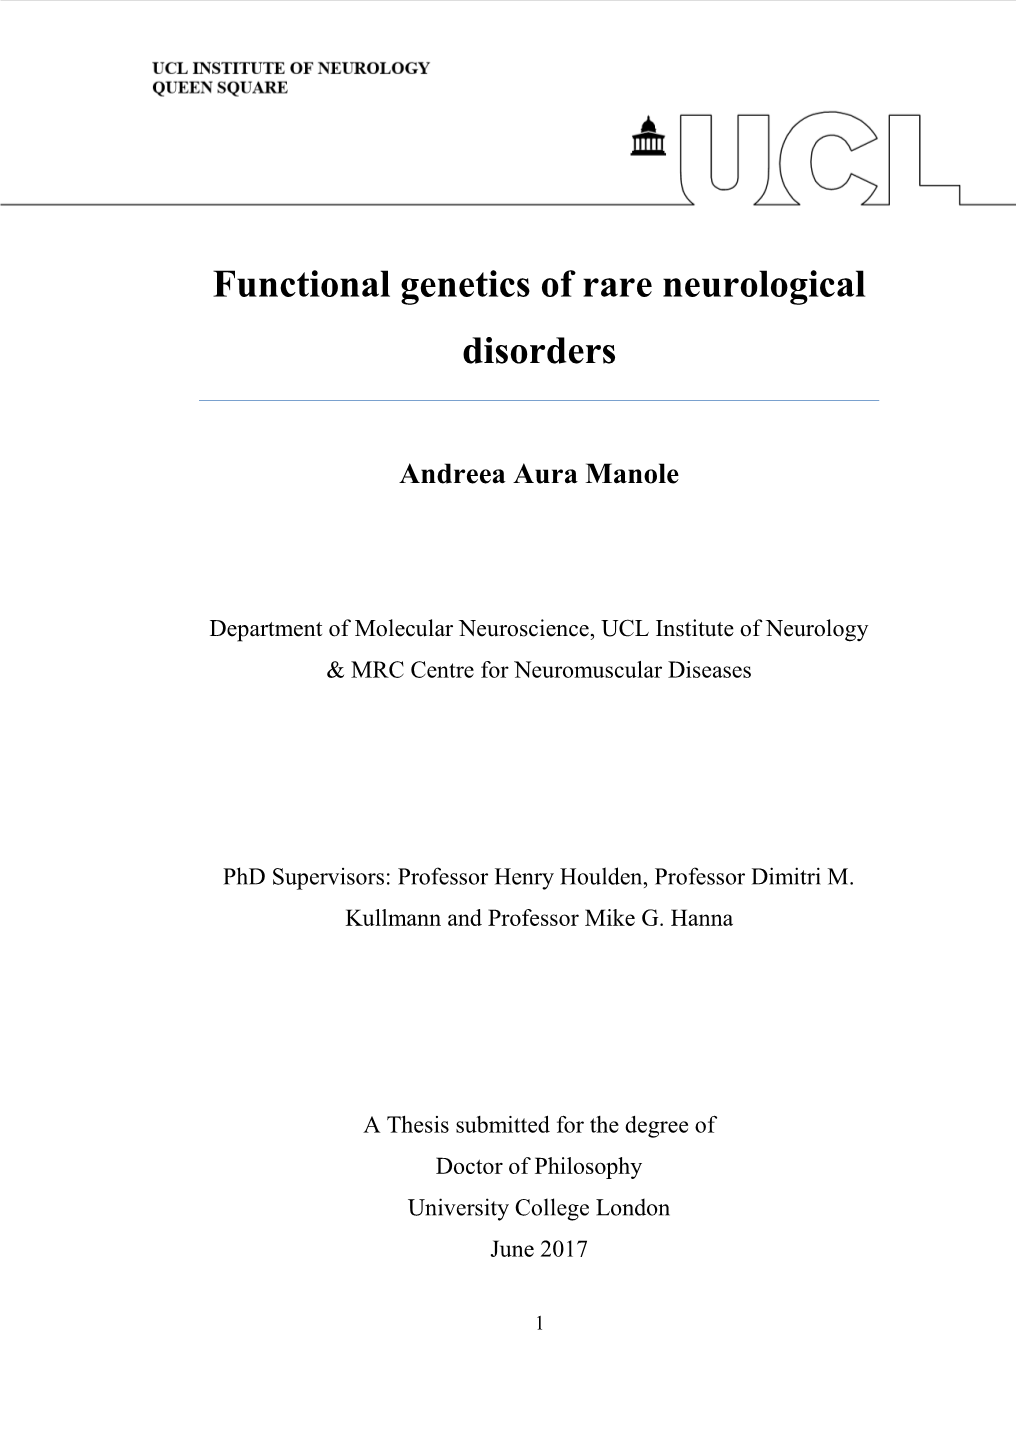 Functional Genetics of Rare Neurological Disorders